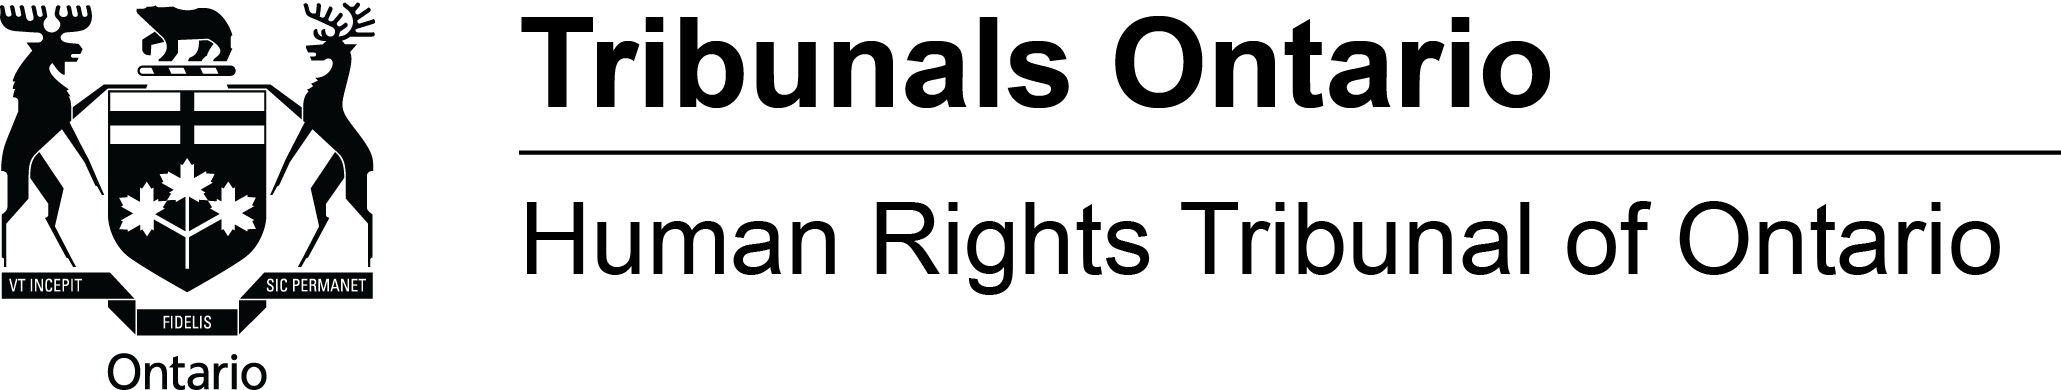 Human Rights Tribunal of Ontario logo